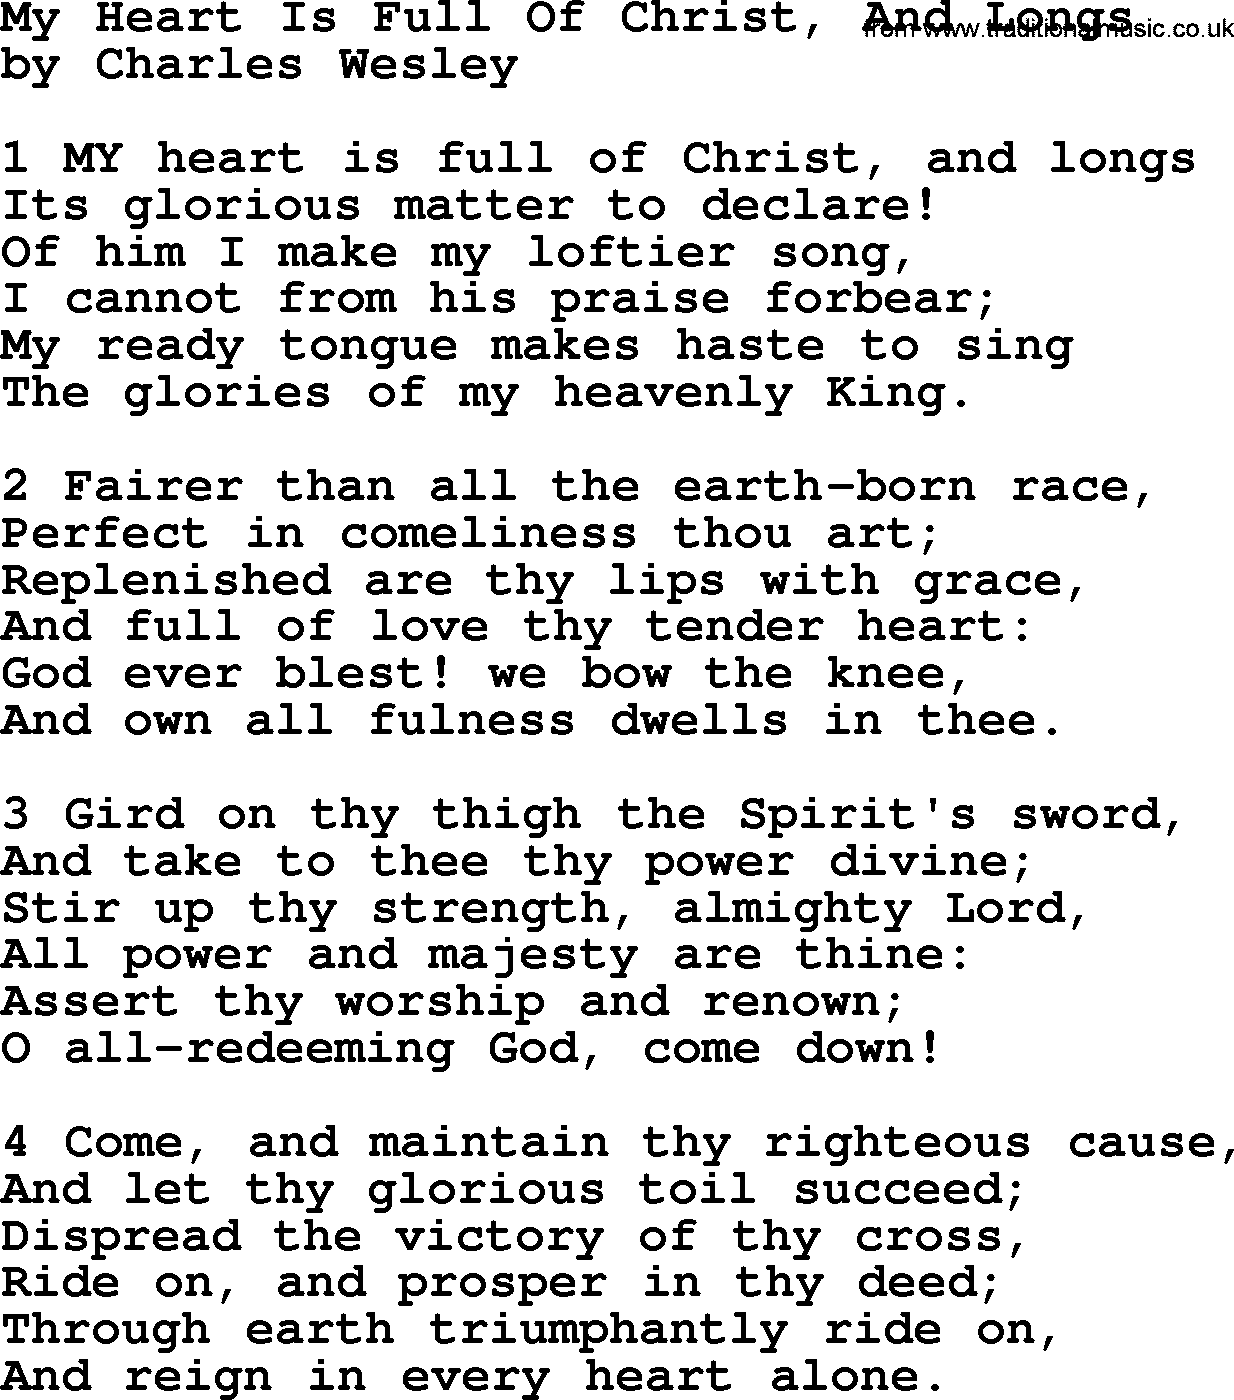 Charles Wesley hymn: My Heart Is Full Of Christ, And Longs, lyrics